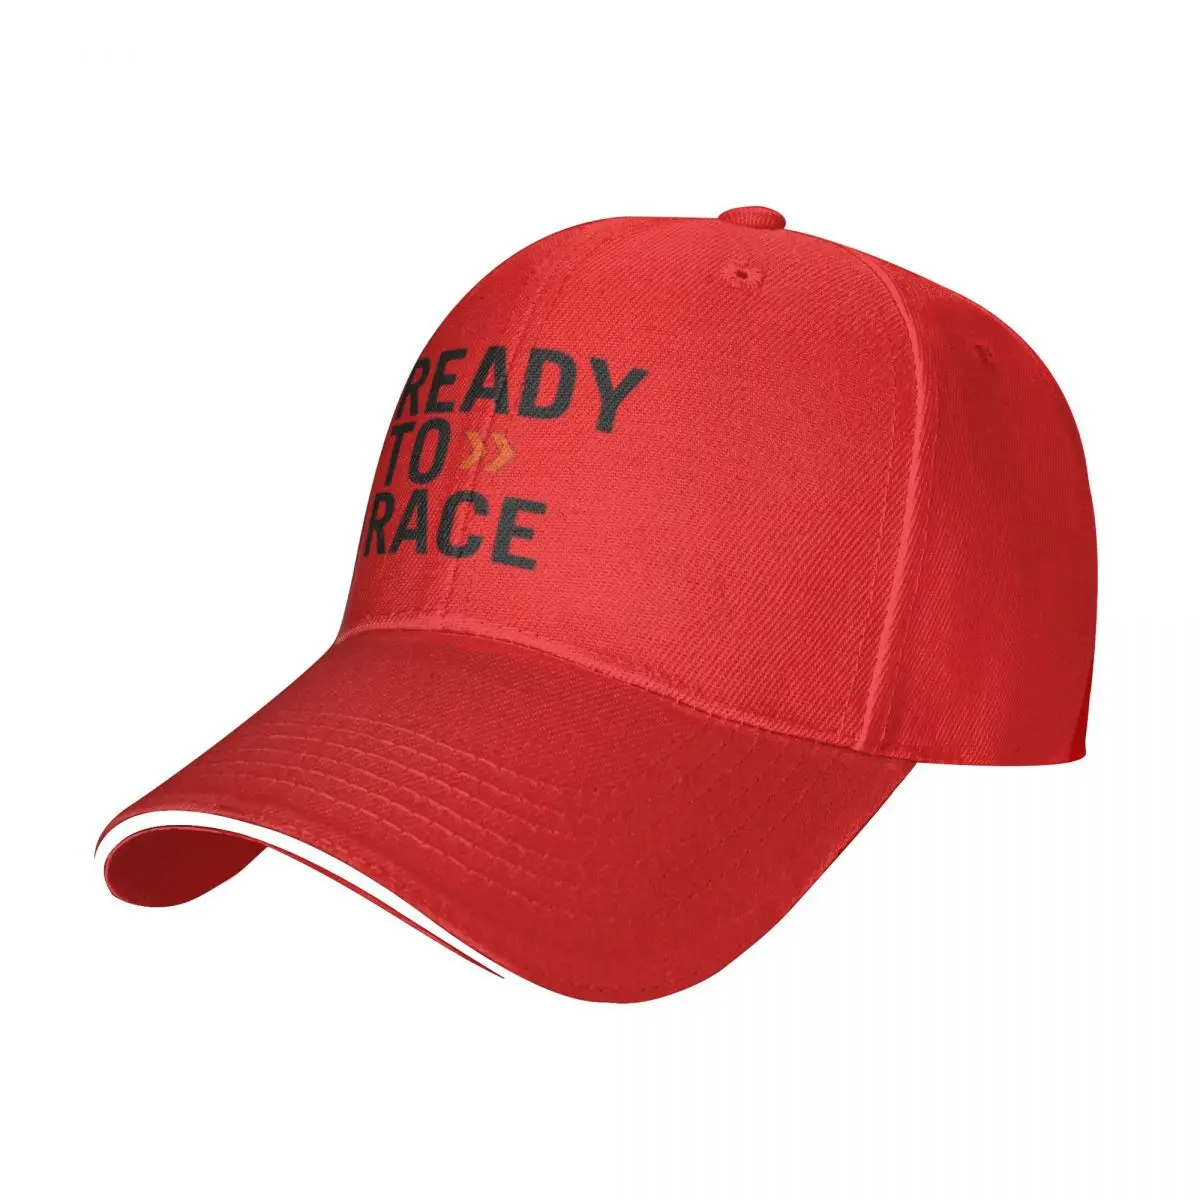 Best Seller Ktm Ready To Race Merchandise Baseball Cap Men Hats Women Visor  Protection Snapback ready to race Caps - AliExpress